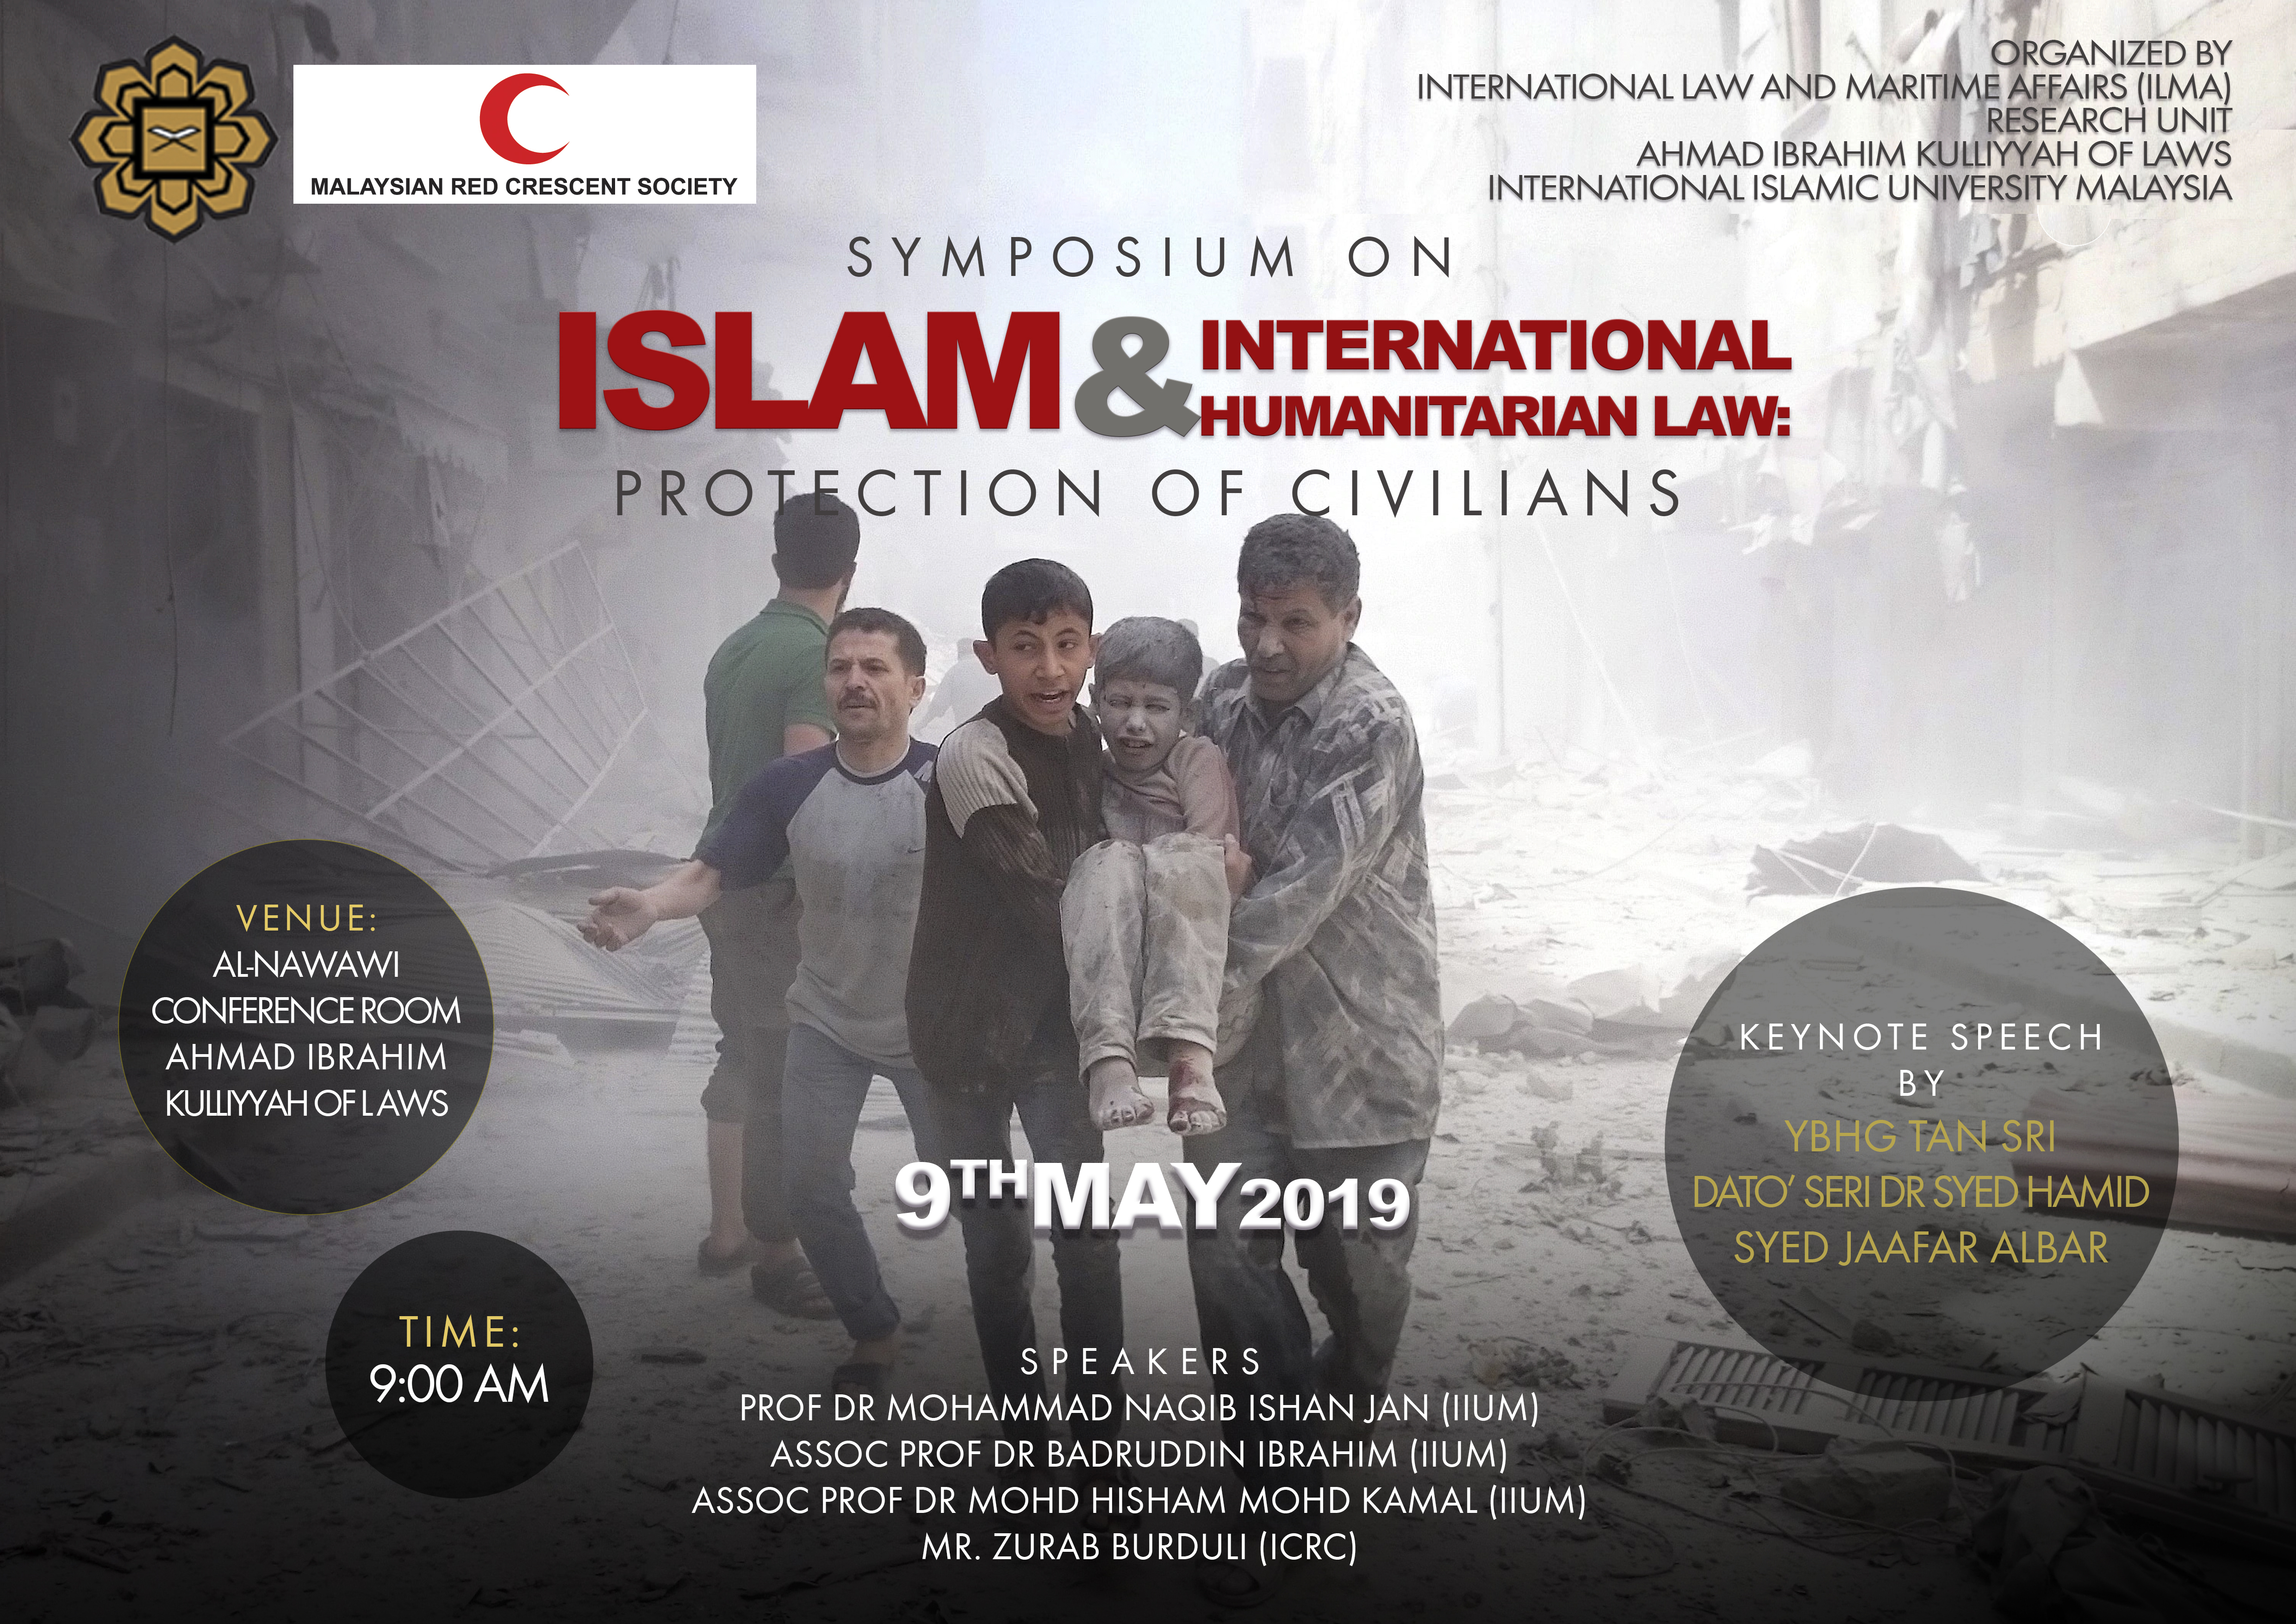 Symposium on Islam & International Humanitarian Law: Protection of Civilians